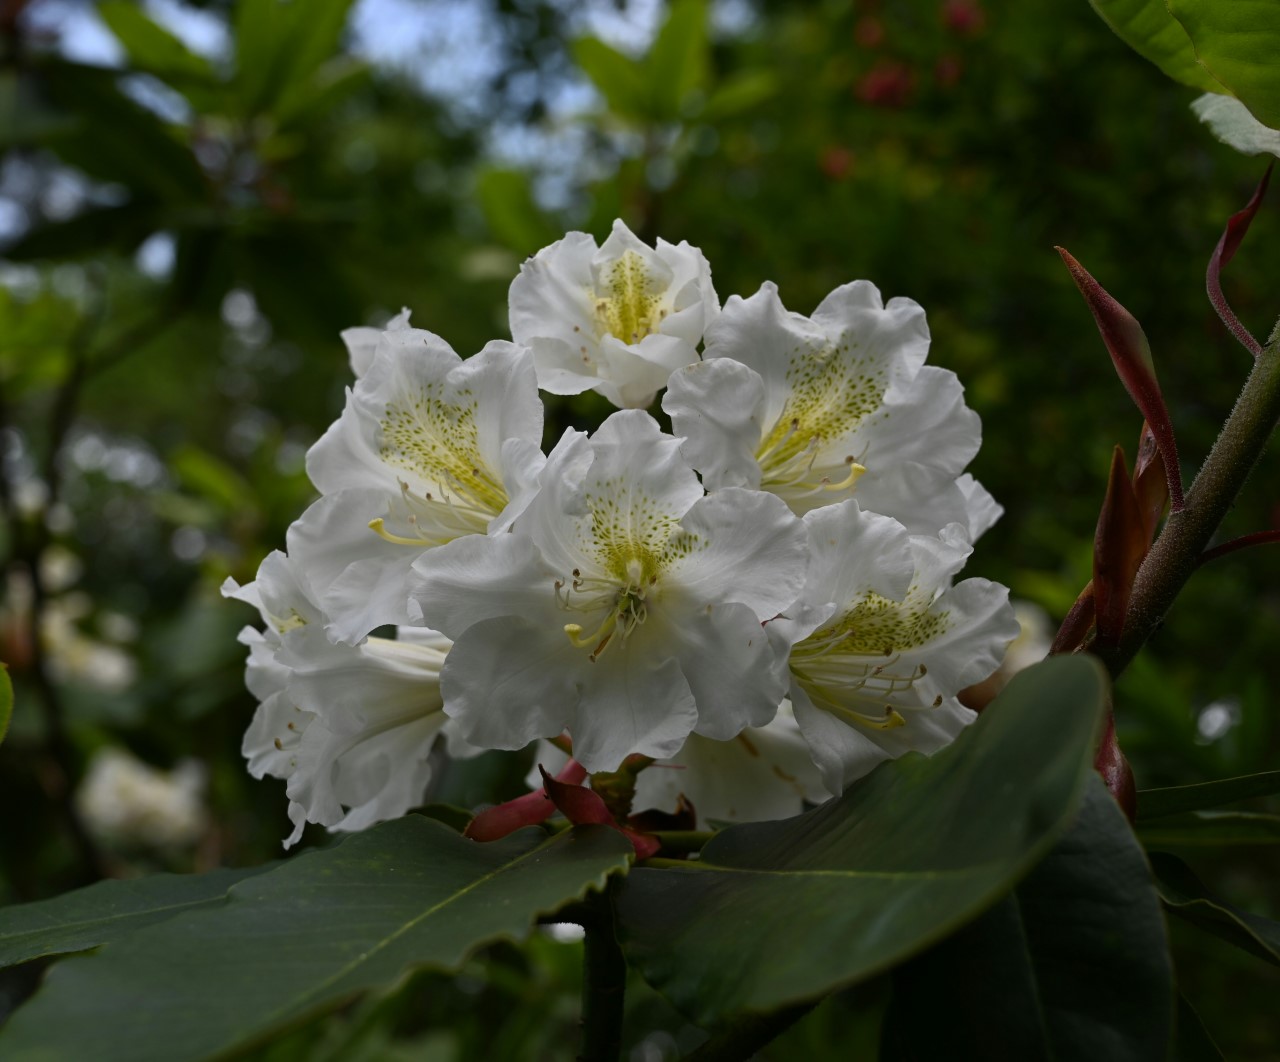 hemsleyanum x ungernii